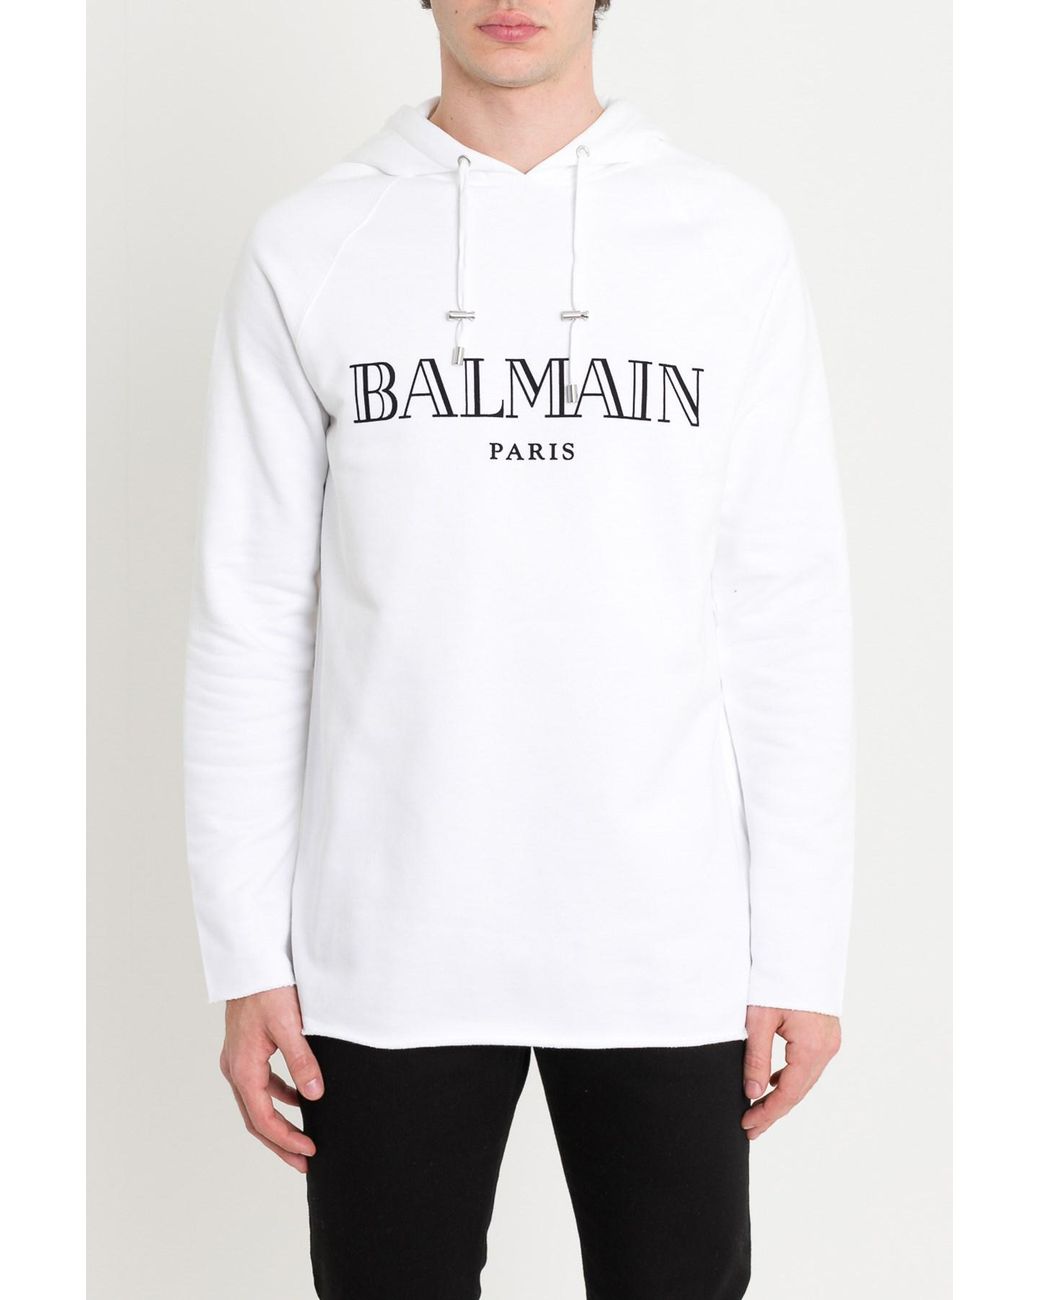 Lyst - Balmain Logo Hoodie in White for Men